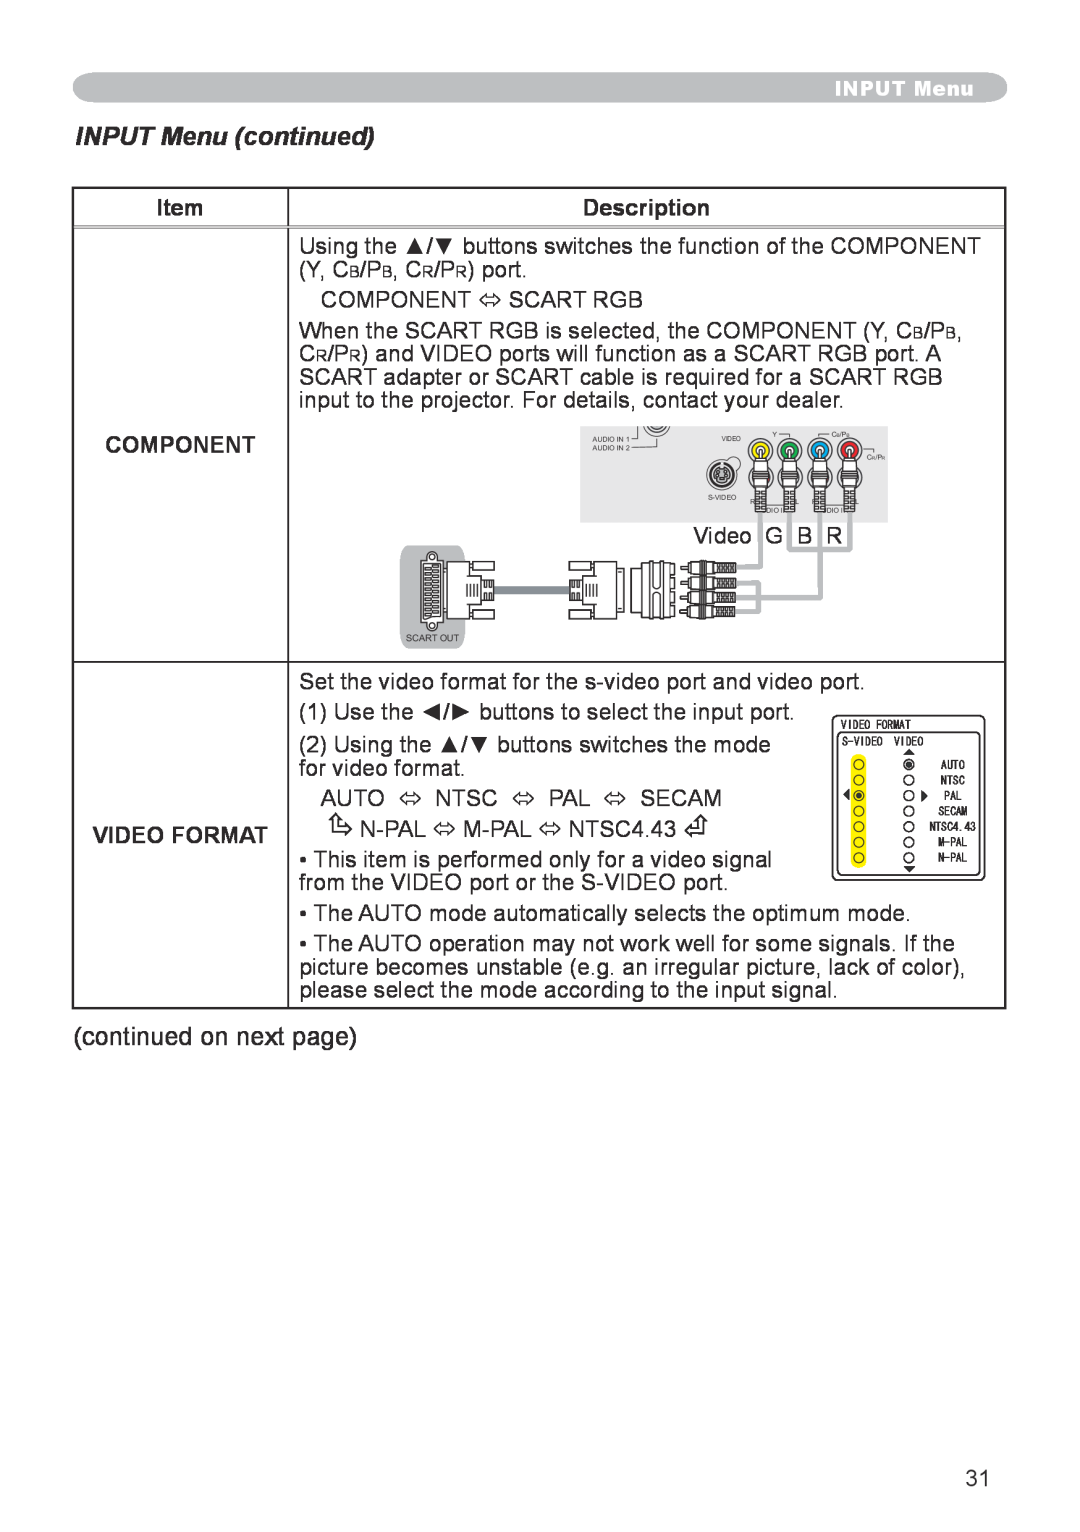 Hitachi CP-X600 user manual INPUT Menu continued, Description, Component, Video Format 